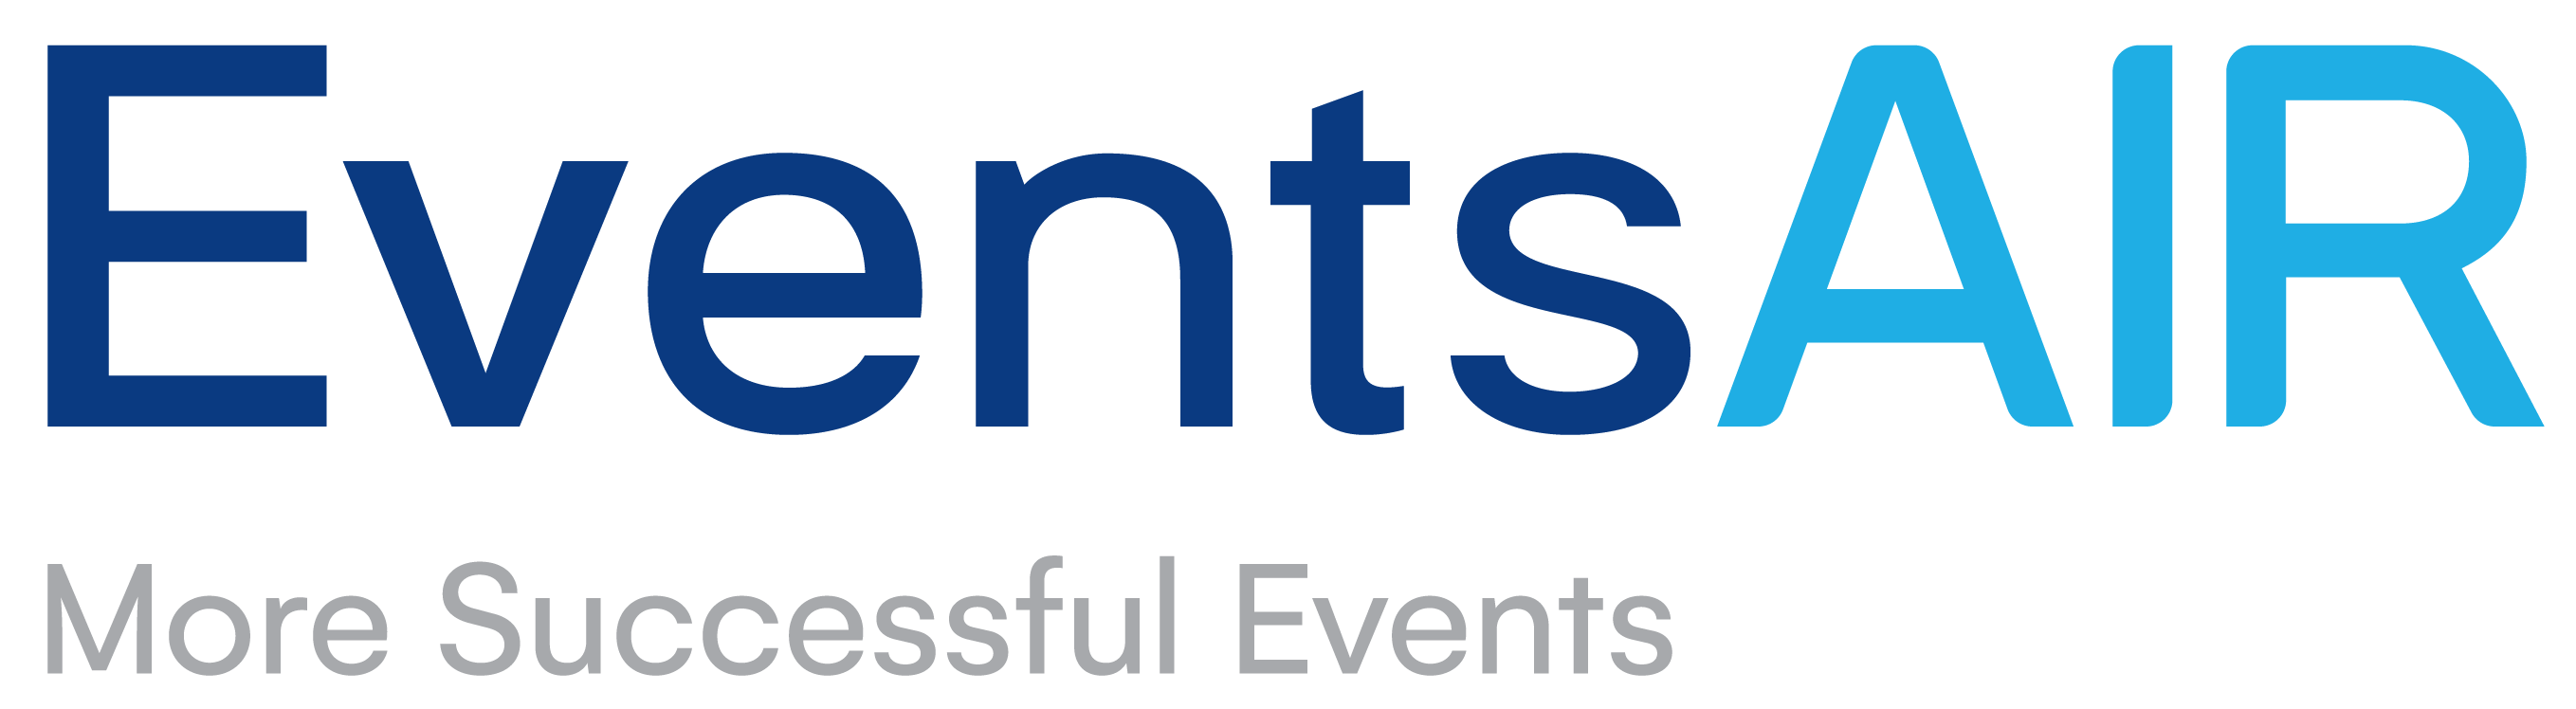 EventsAIR-Main Logo with Tagline-HighRes_crop